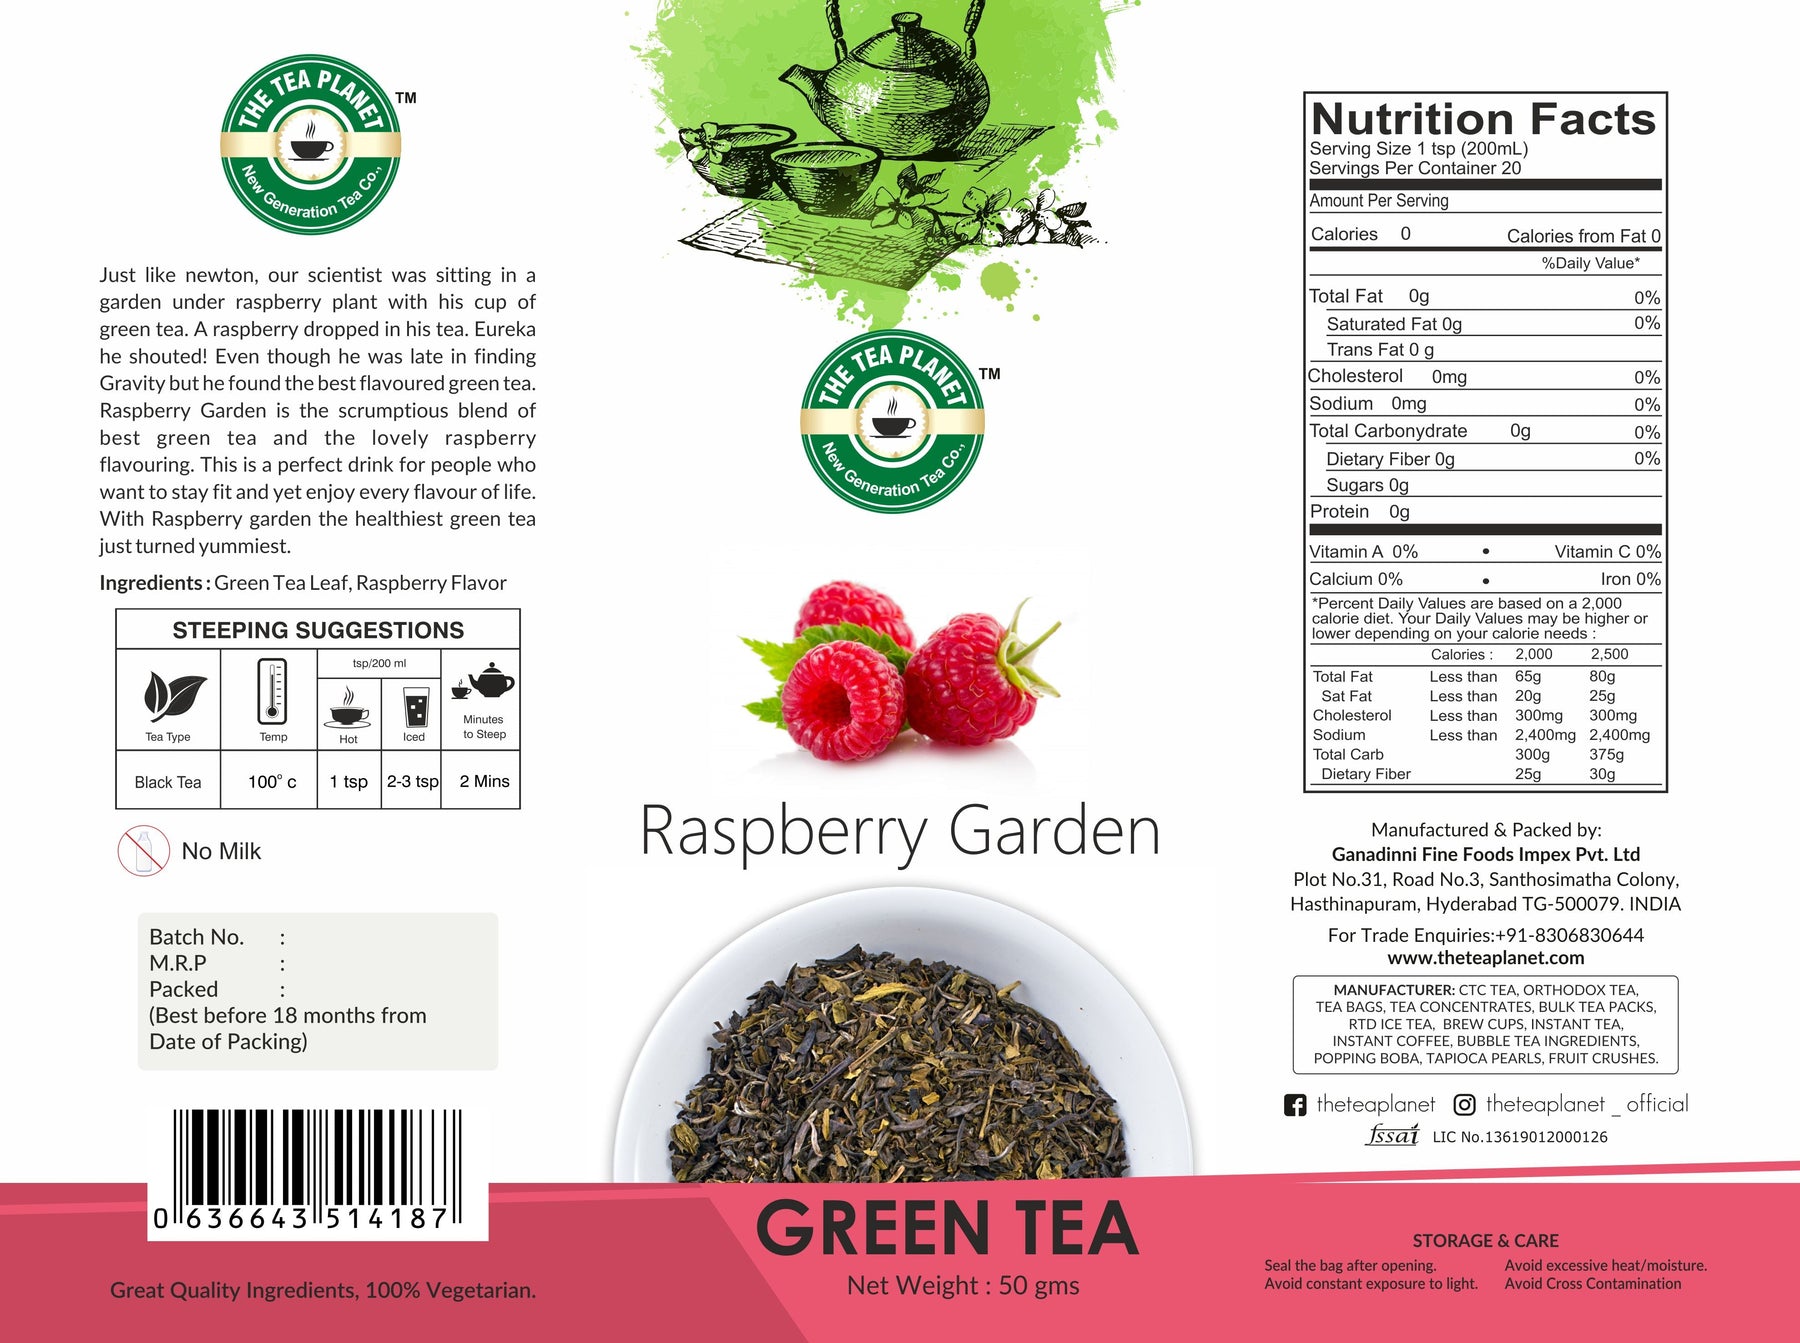 Raspberry Garden Orthodox Tea - 50 gms